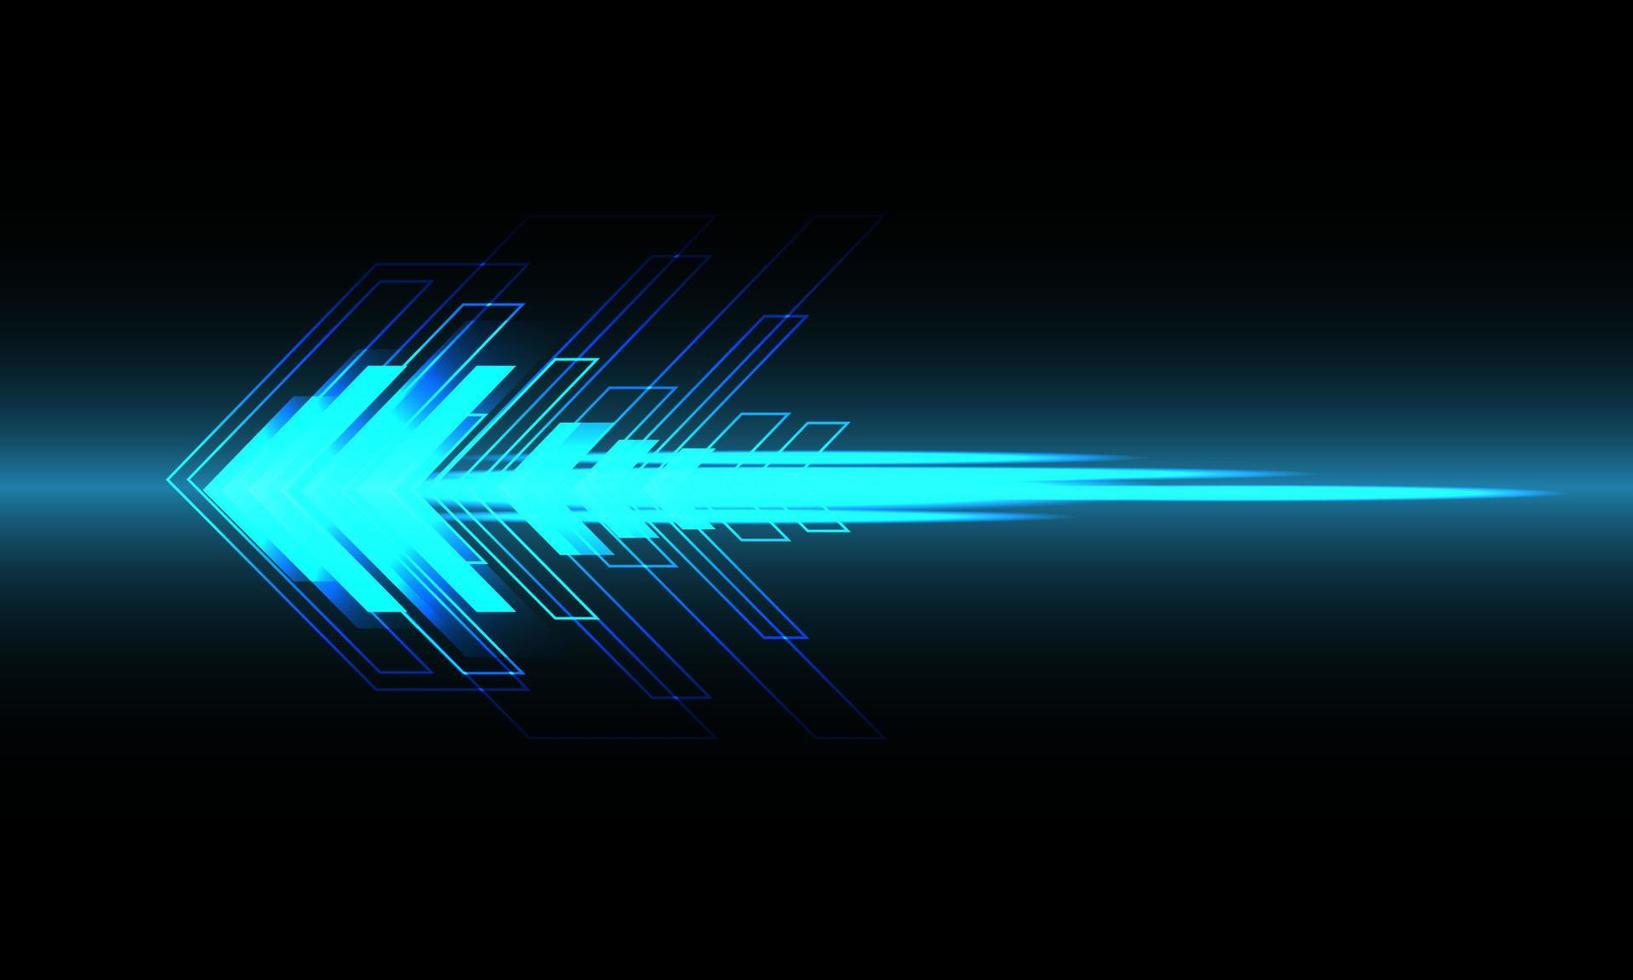 abstrakt blått ljus pil hastighet teknik på svart desogn modern futuristisk bakgrund vektor